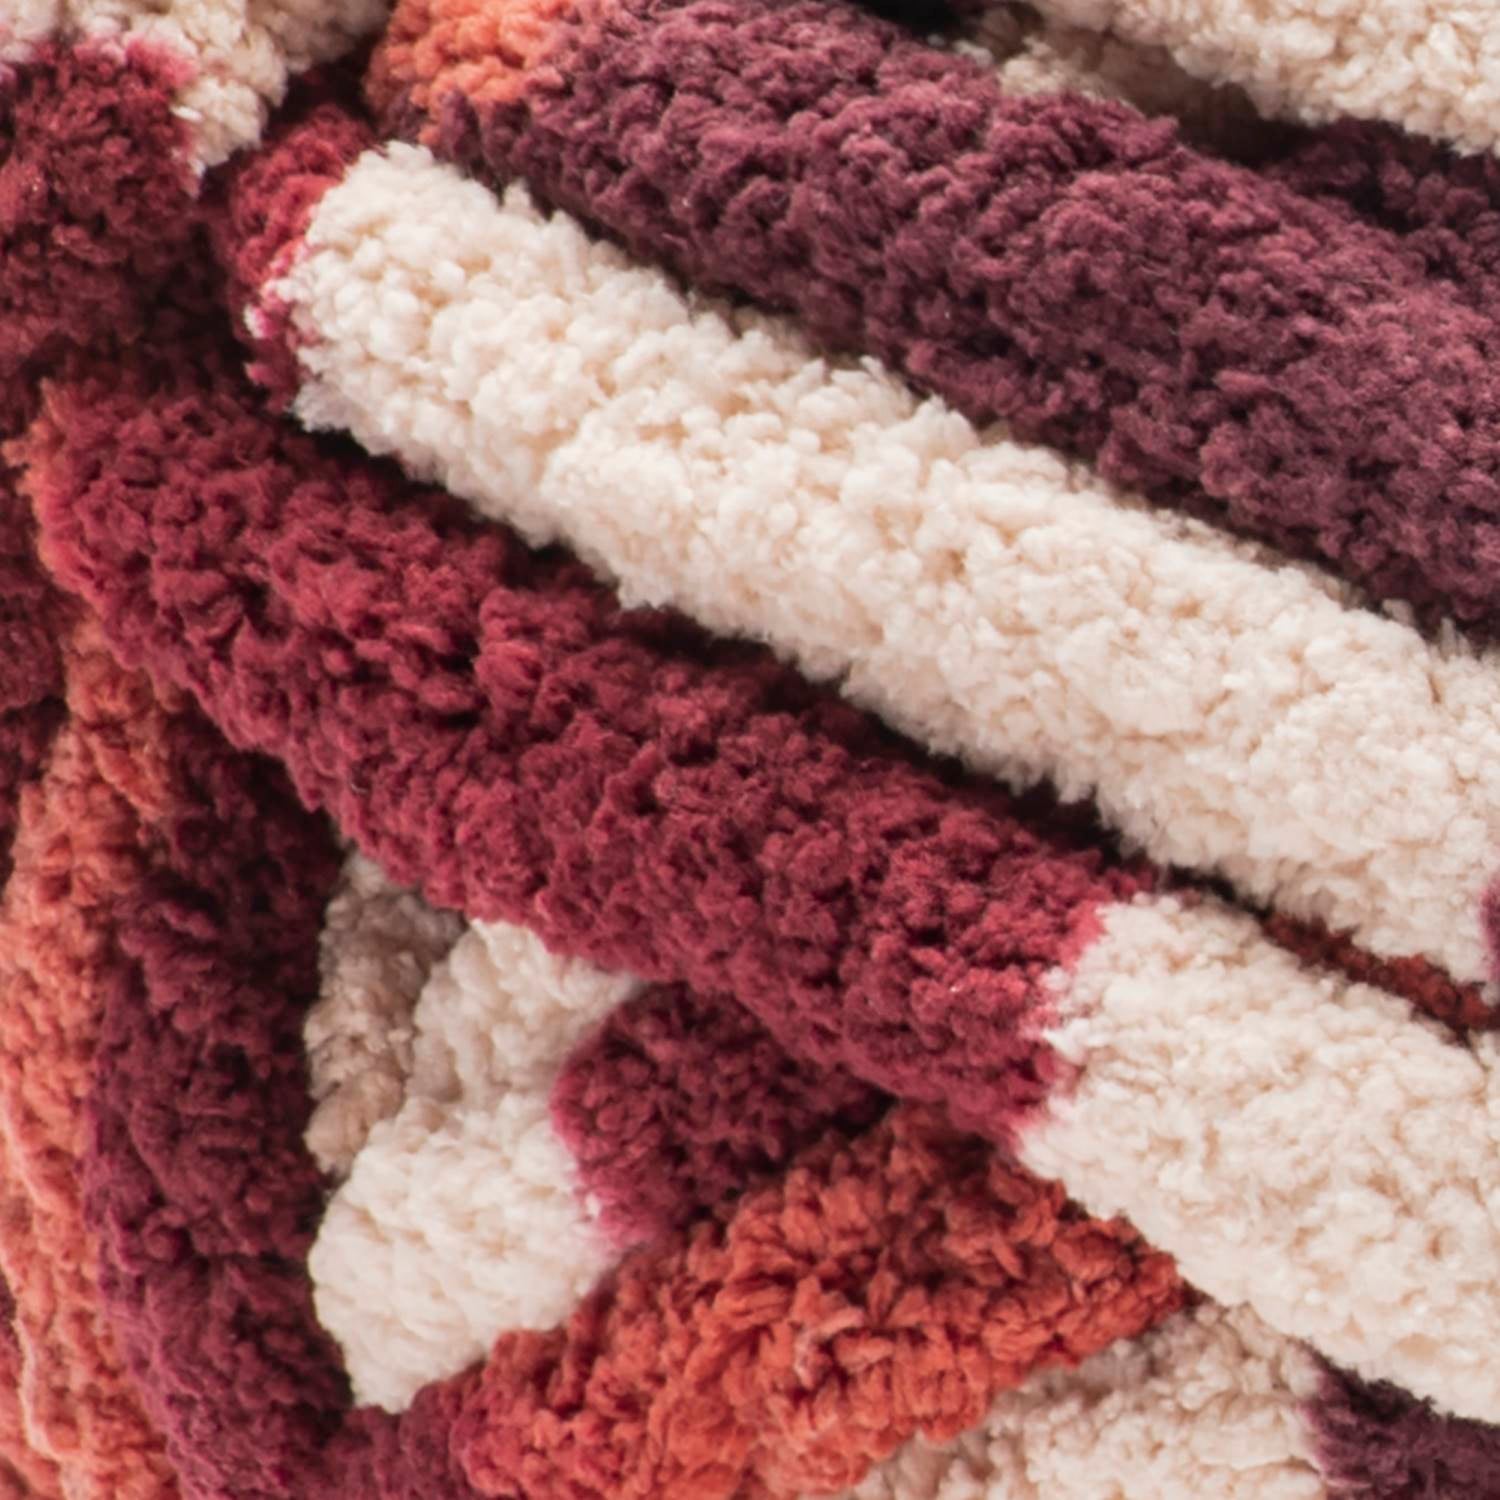 Bernat® Blanket Extra Thick™ Yarn, Polyester #7 Jumbo, 21.2oz/600g, 72  Yards 